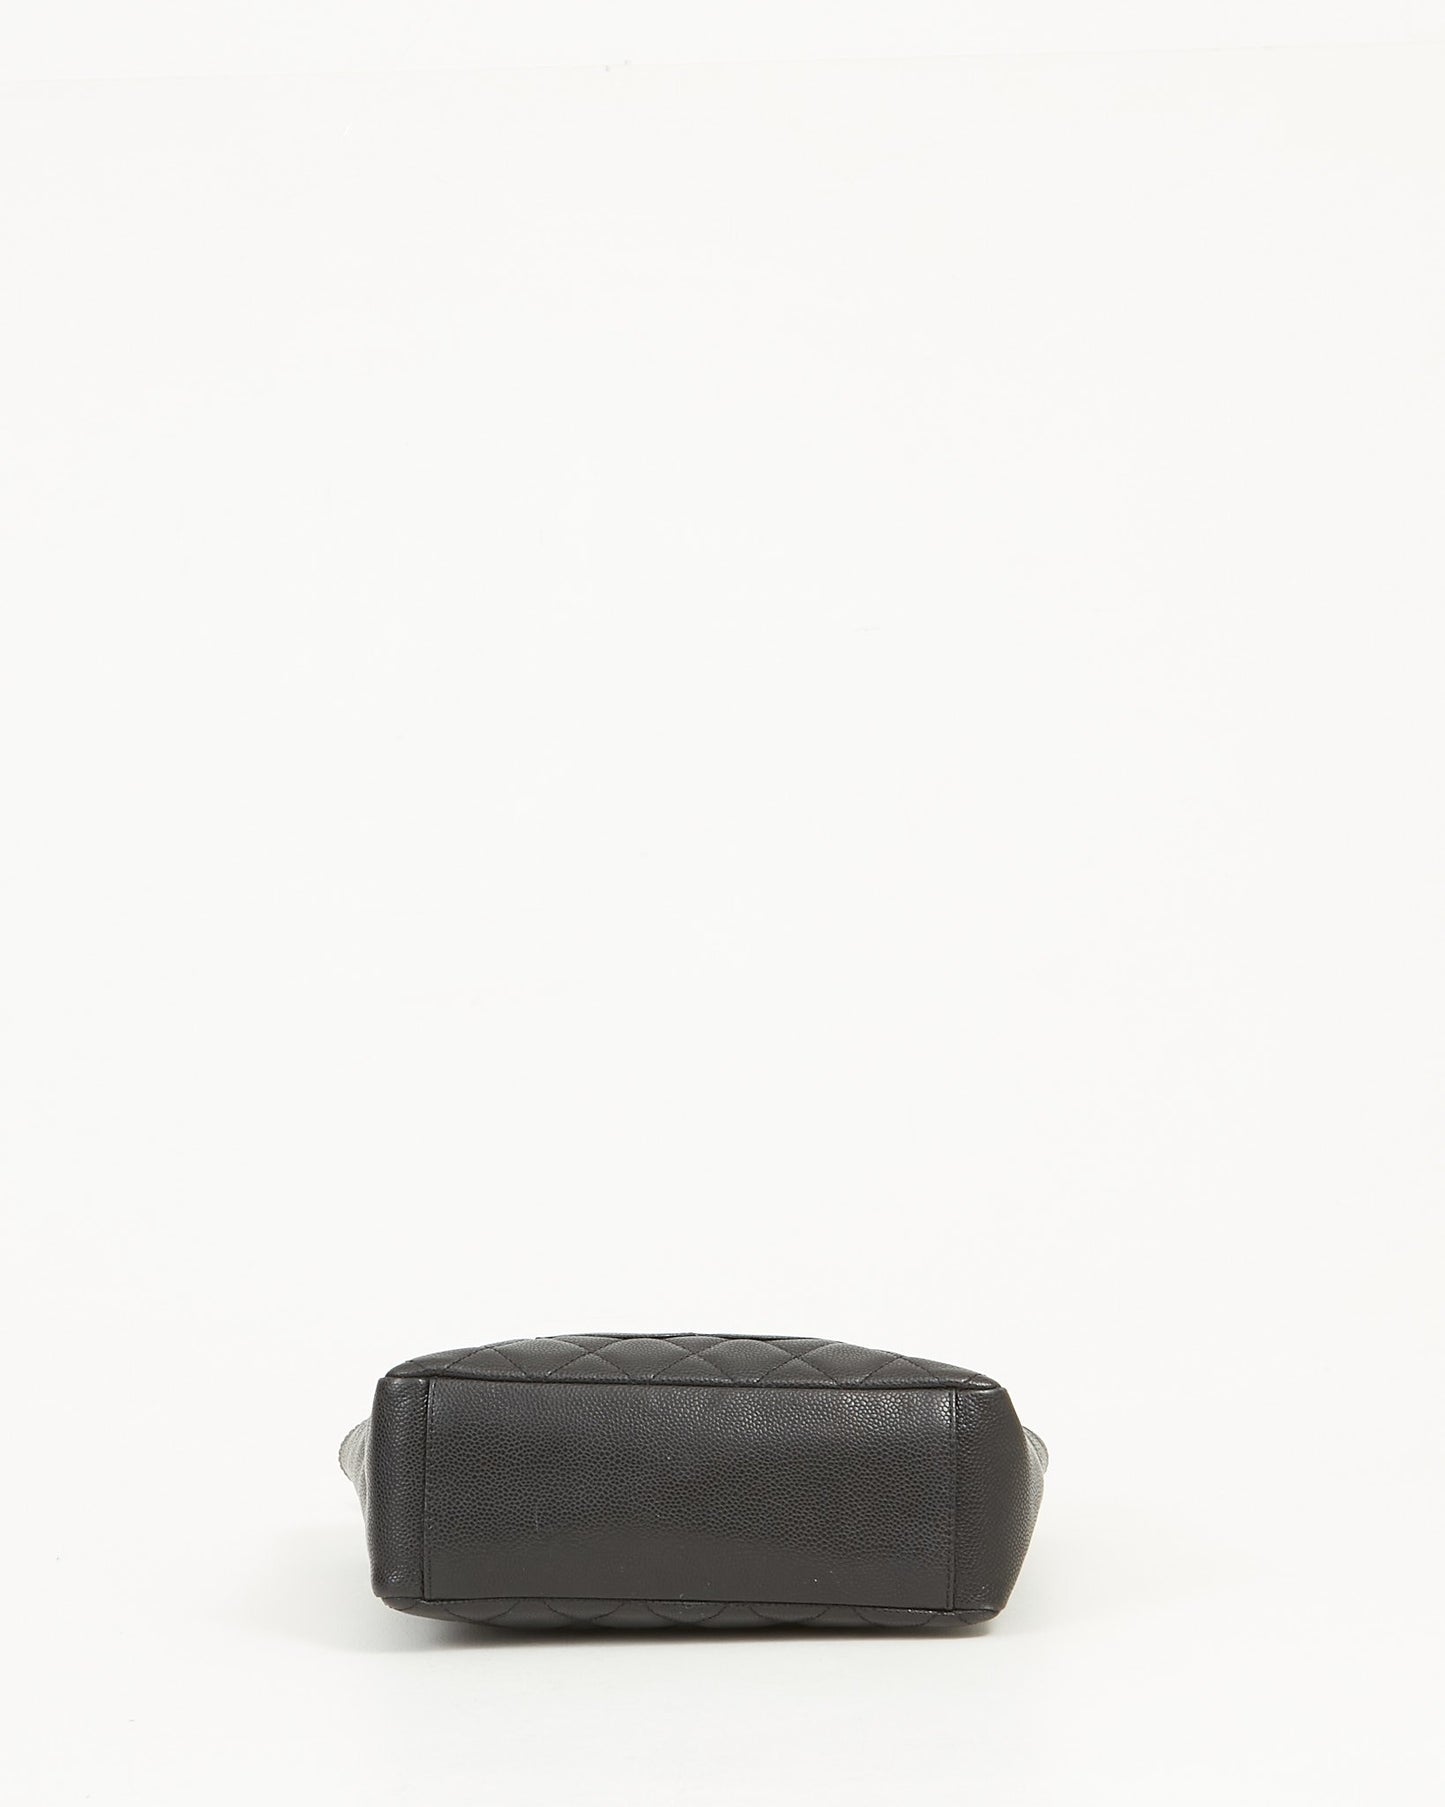 Chanel Black Caviar Leather PST GHW Bag